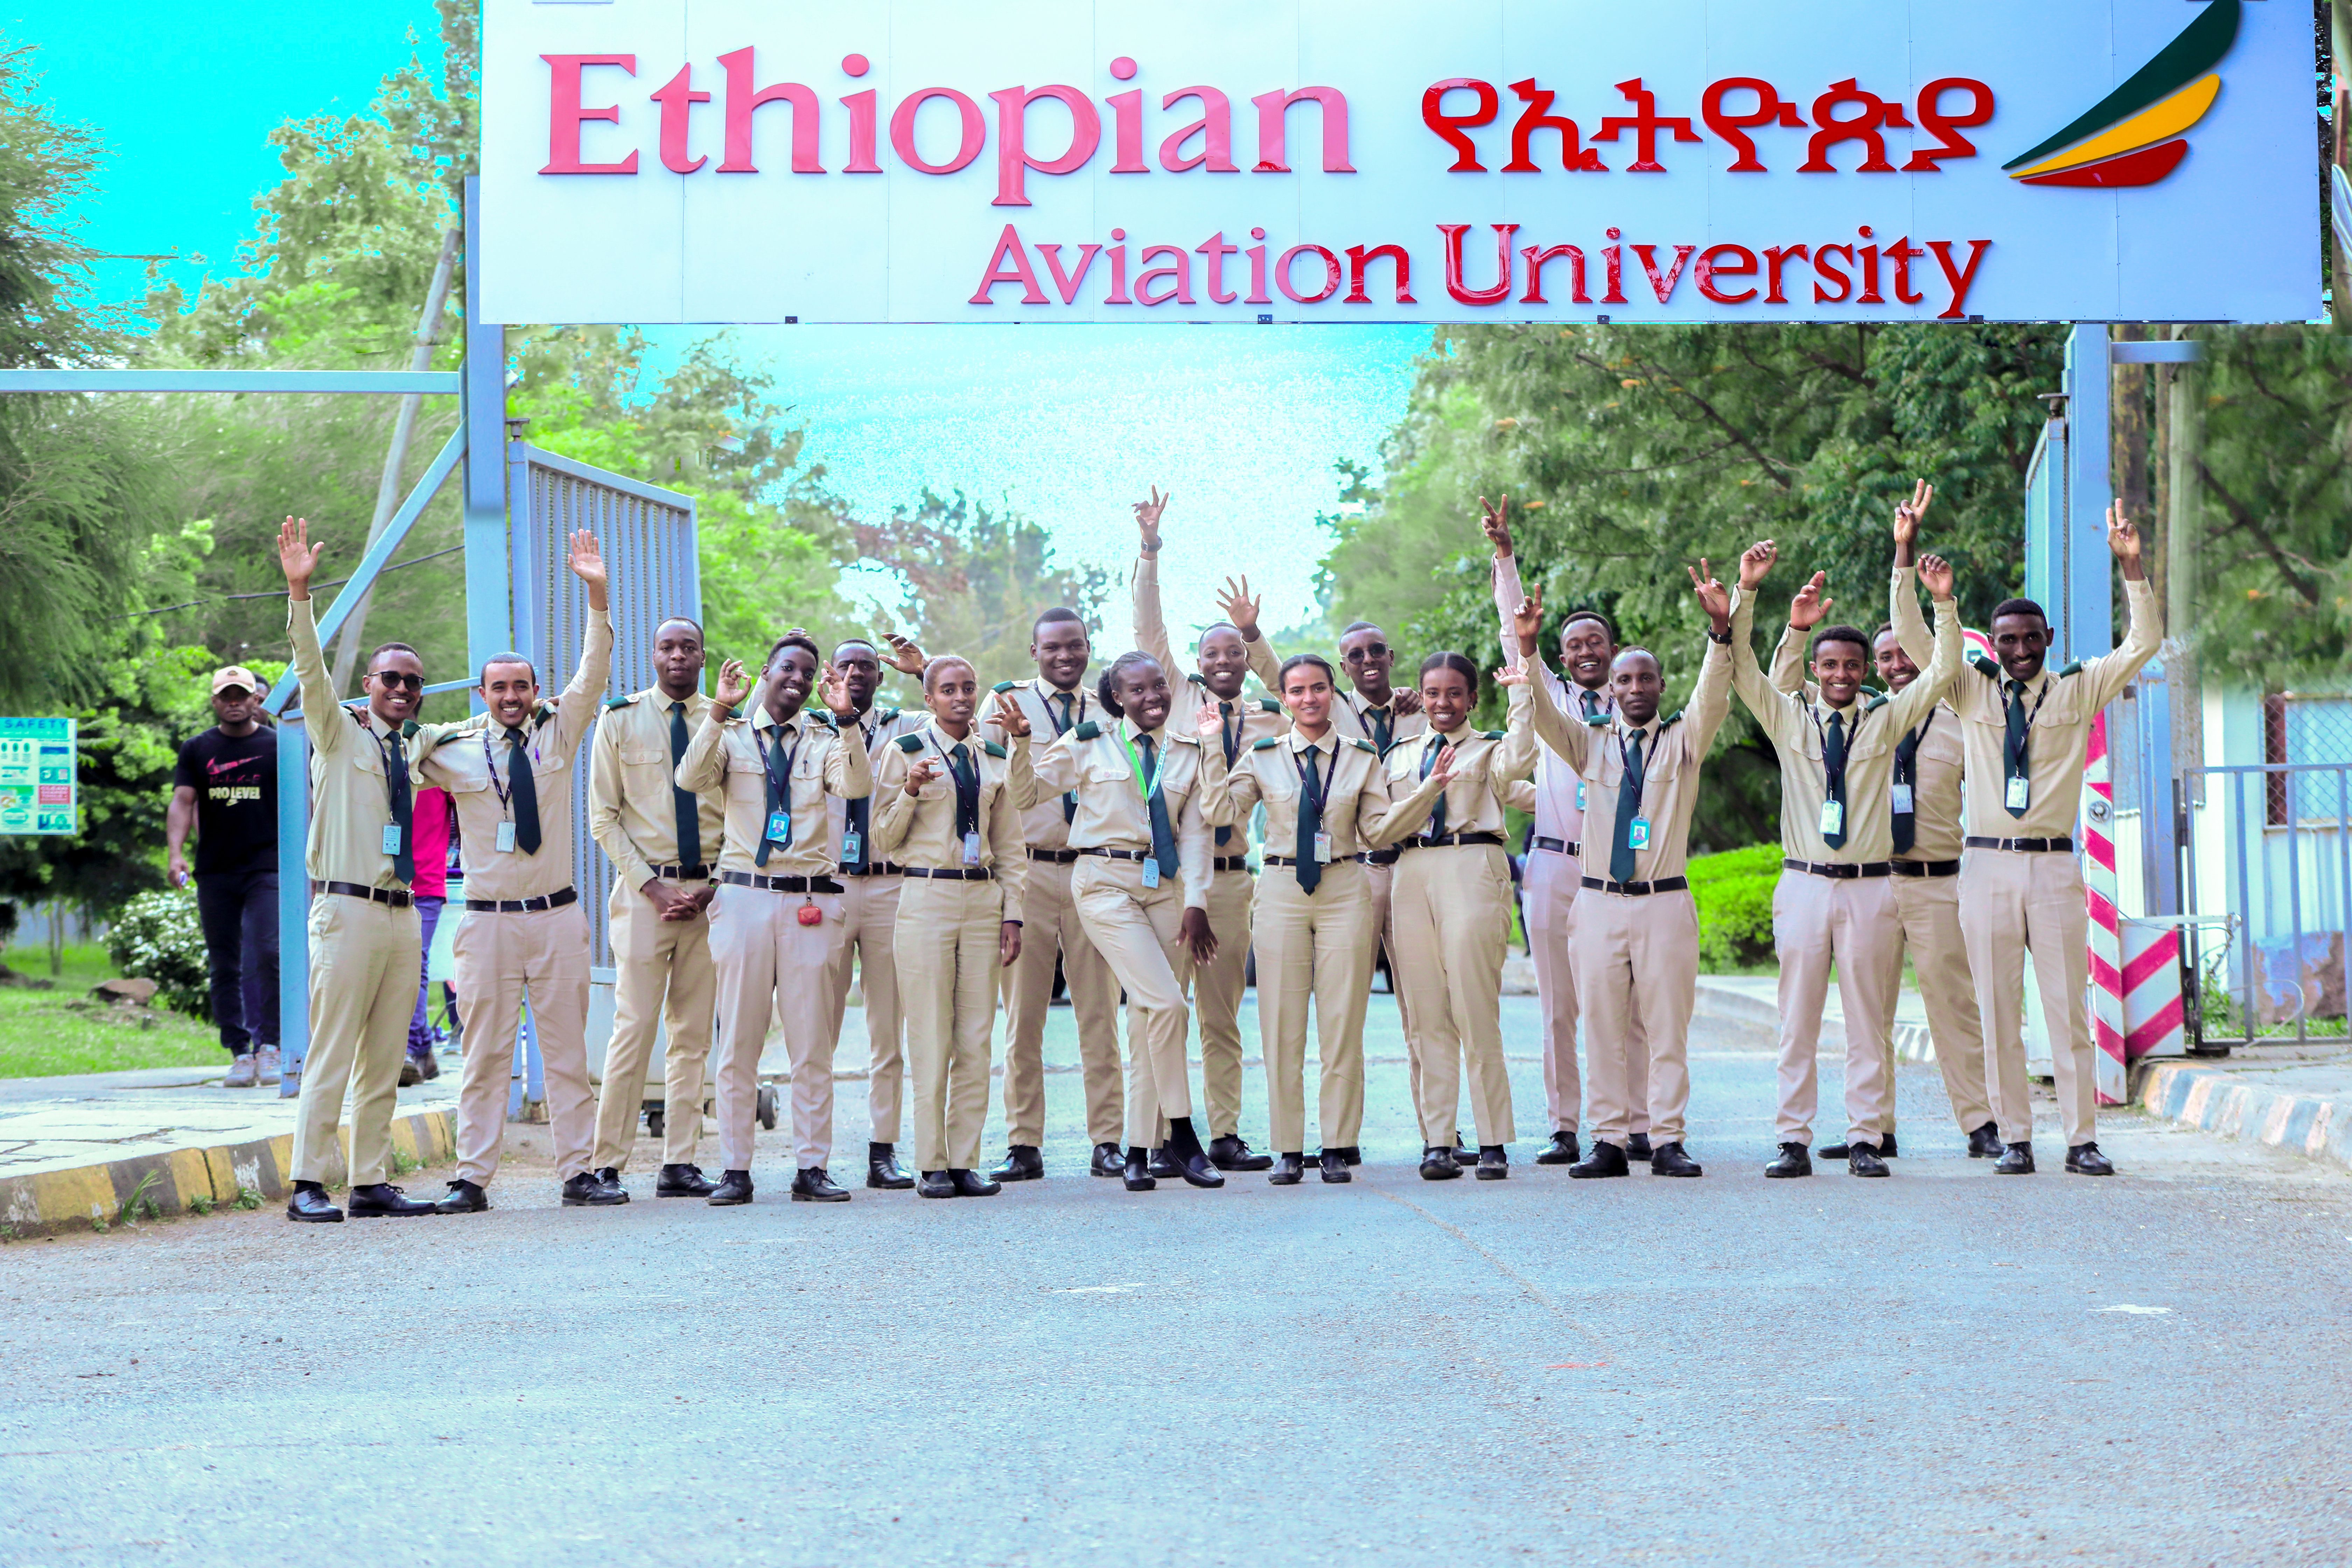 Ethiopian Aviation University students at the gate